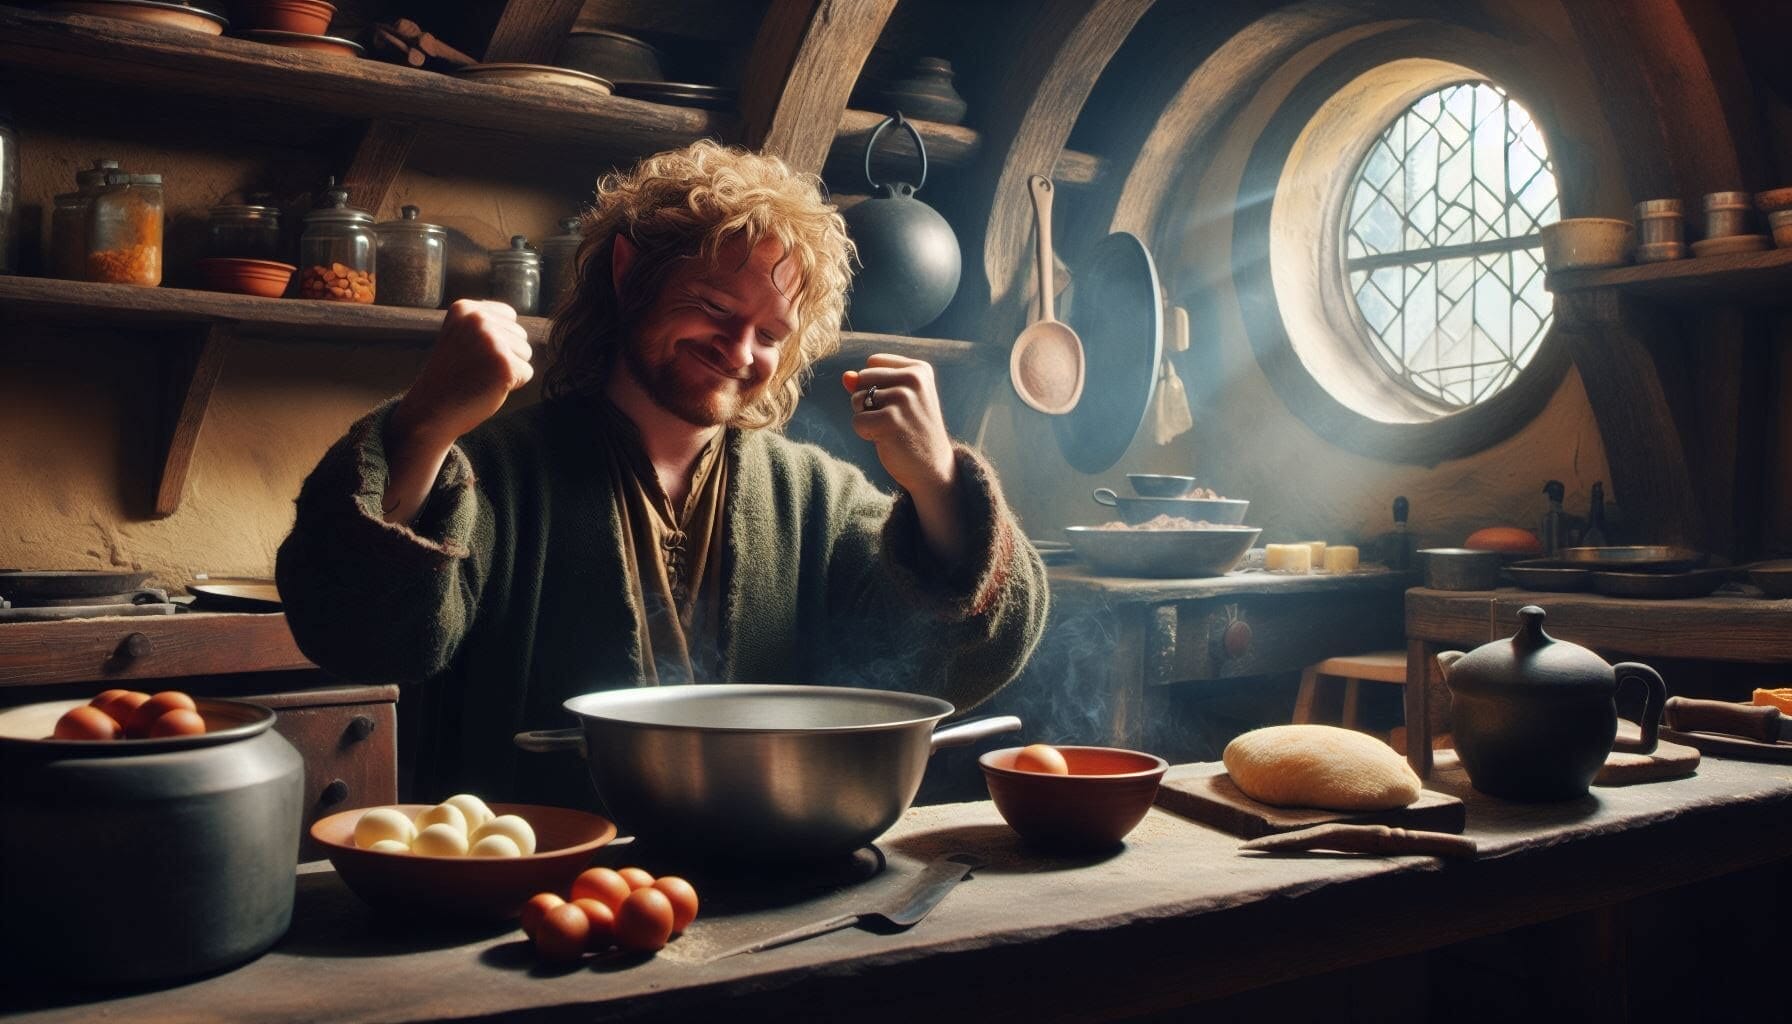 Happy chef hobbit